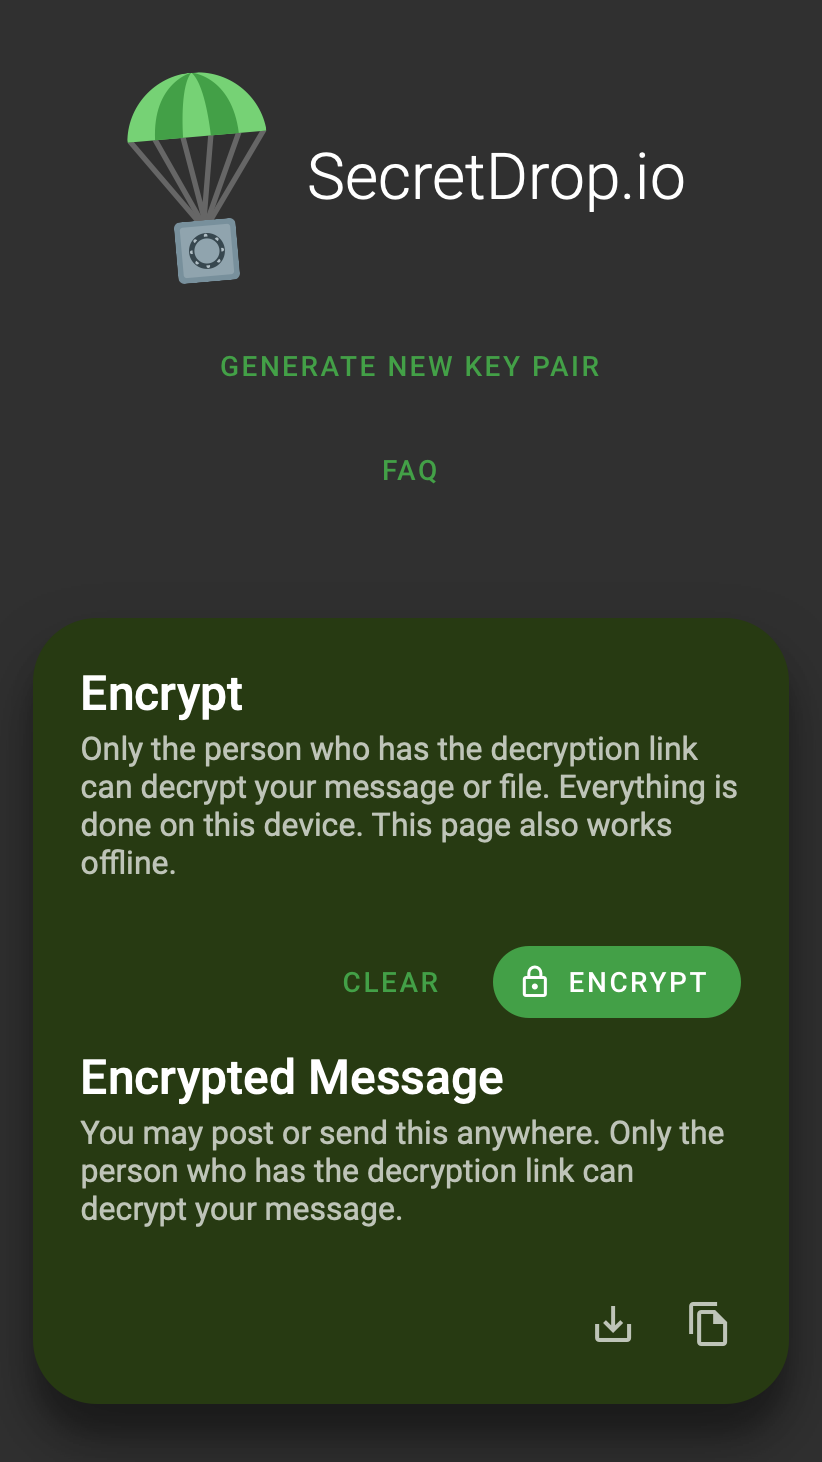 main-test-ts-encrypt-decrypt-encrypt-page-text-encryption-screenshot-411-731-0-snap.png